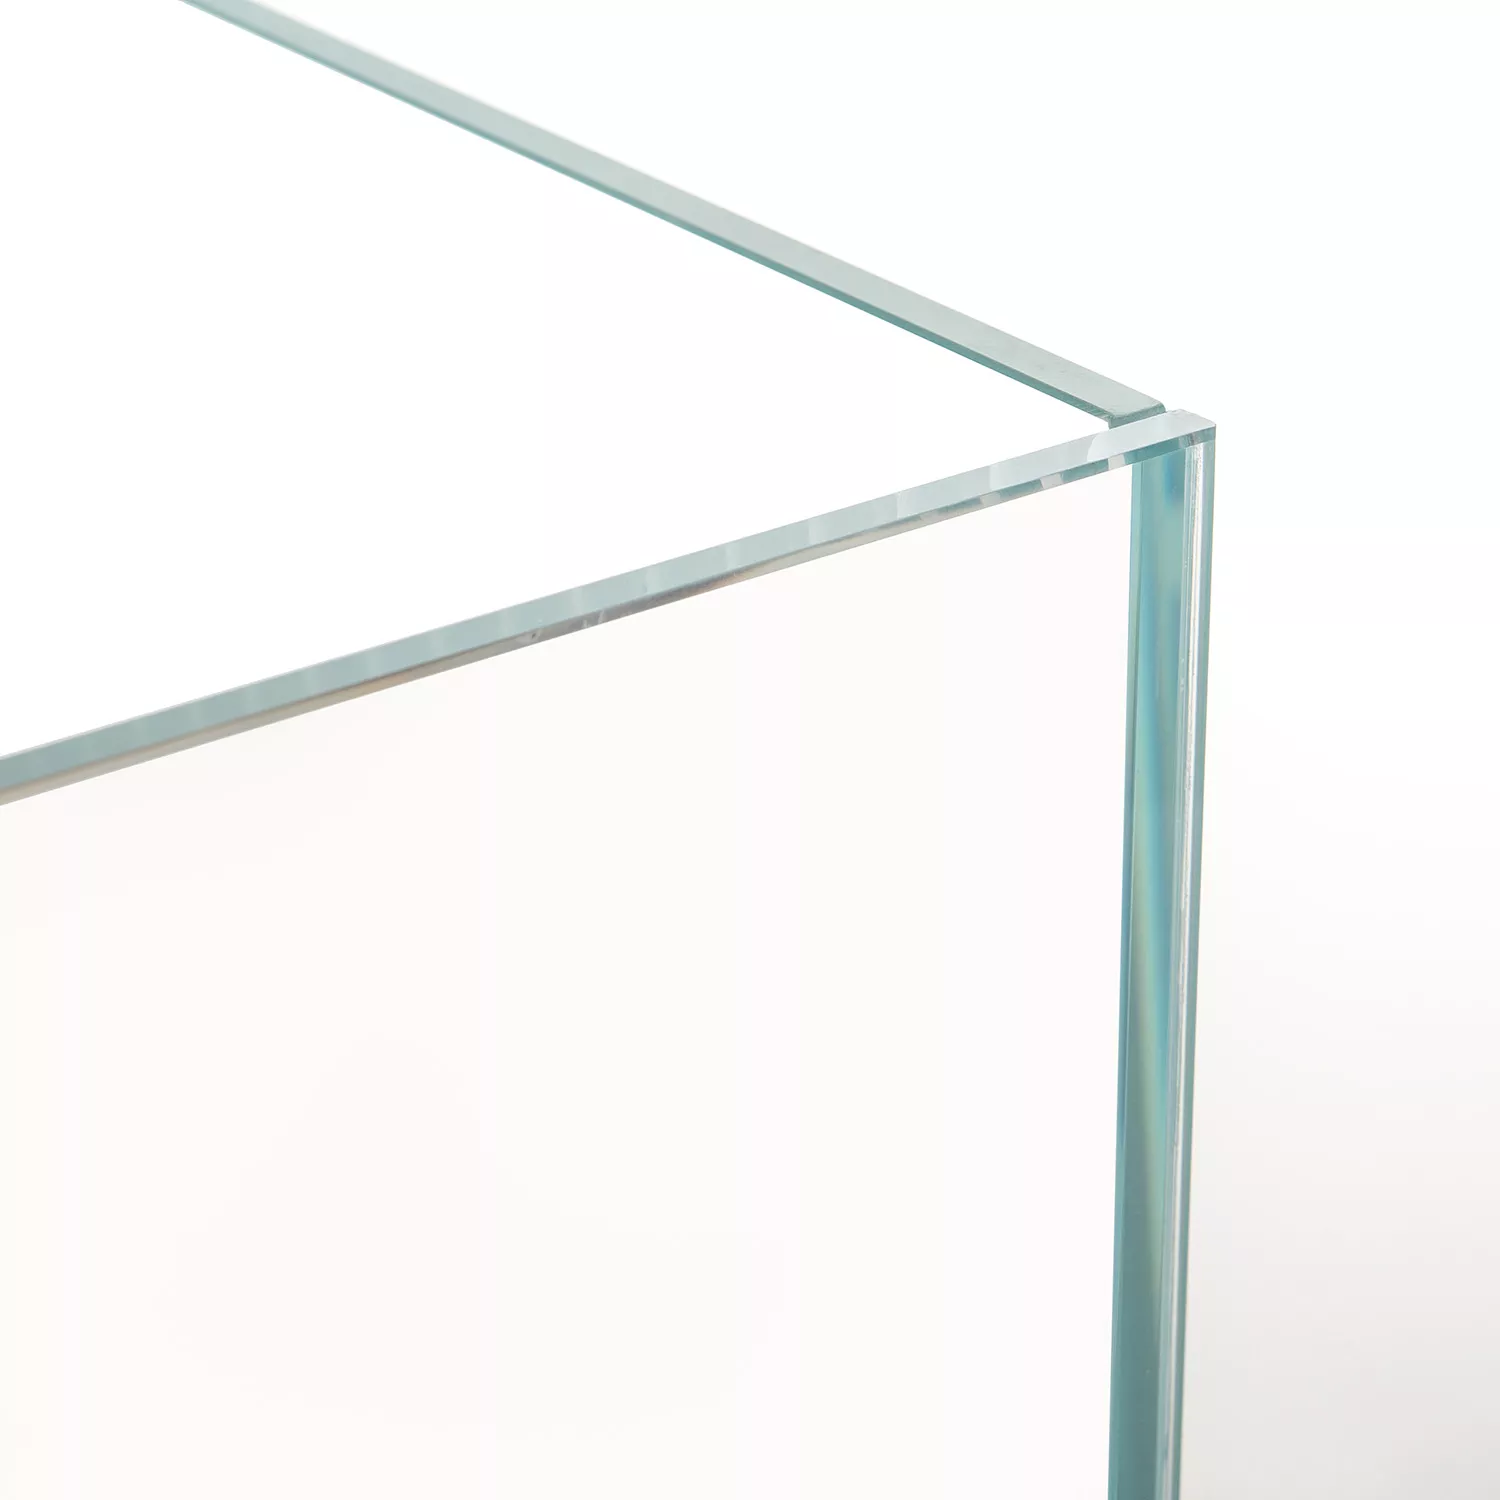 aquael-opti-set-125-blanc-aquarium-81-cm-et-125-l-de-volume-avec-verre-optique-et-eclairage-leds-6